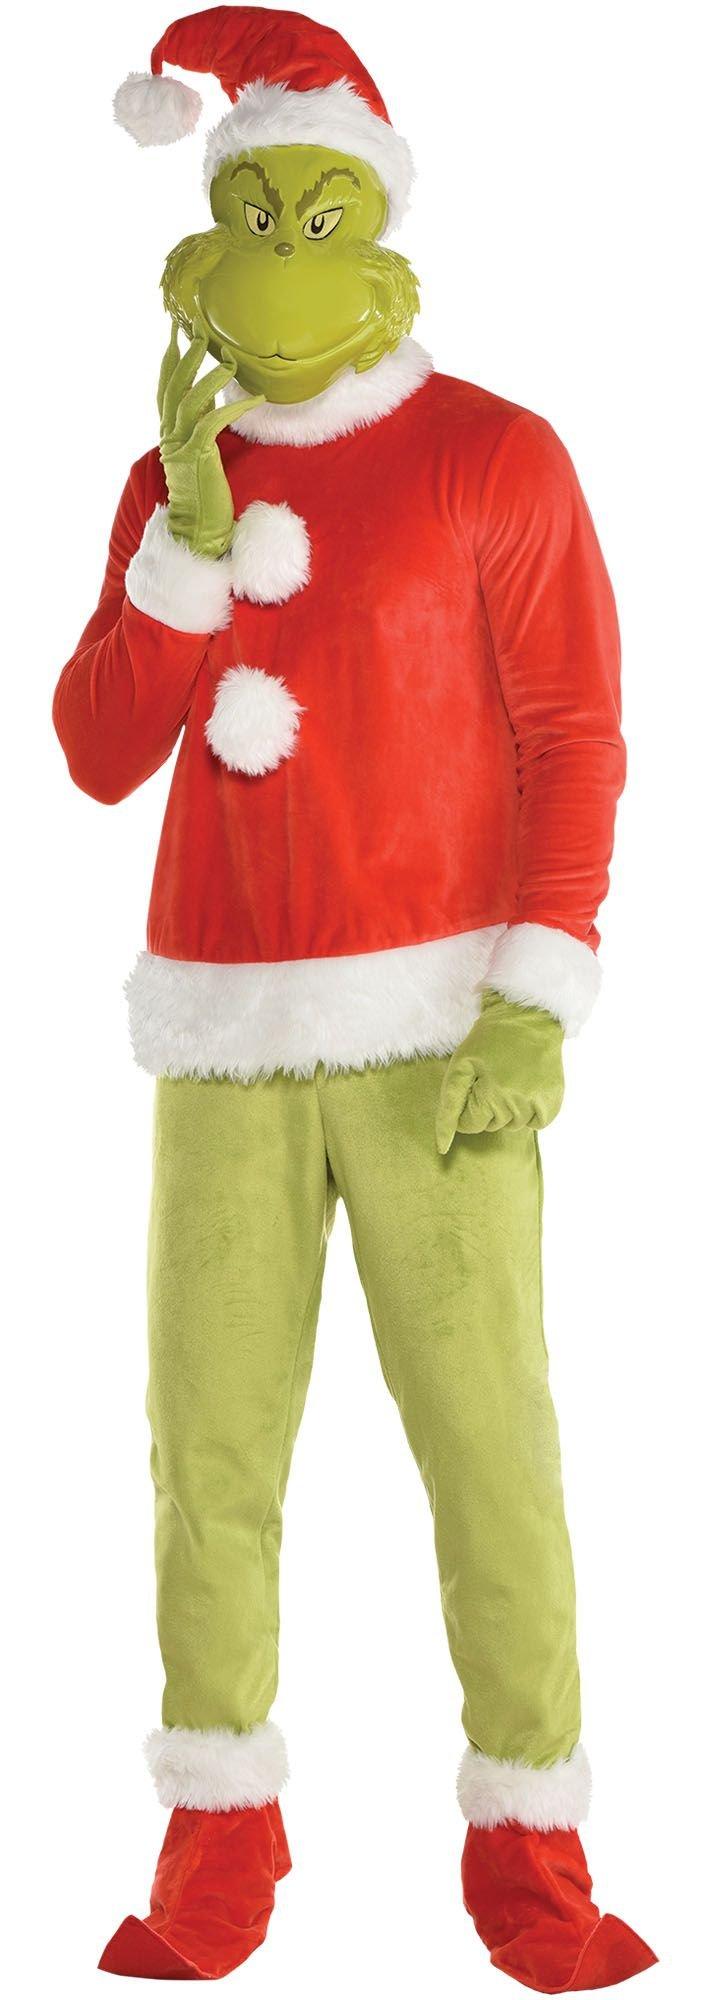 Santa Grinch Costume | Party City